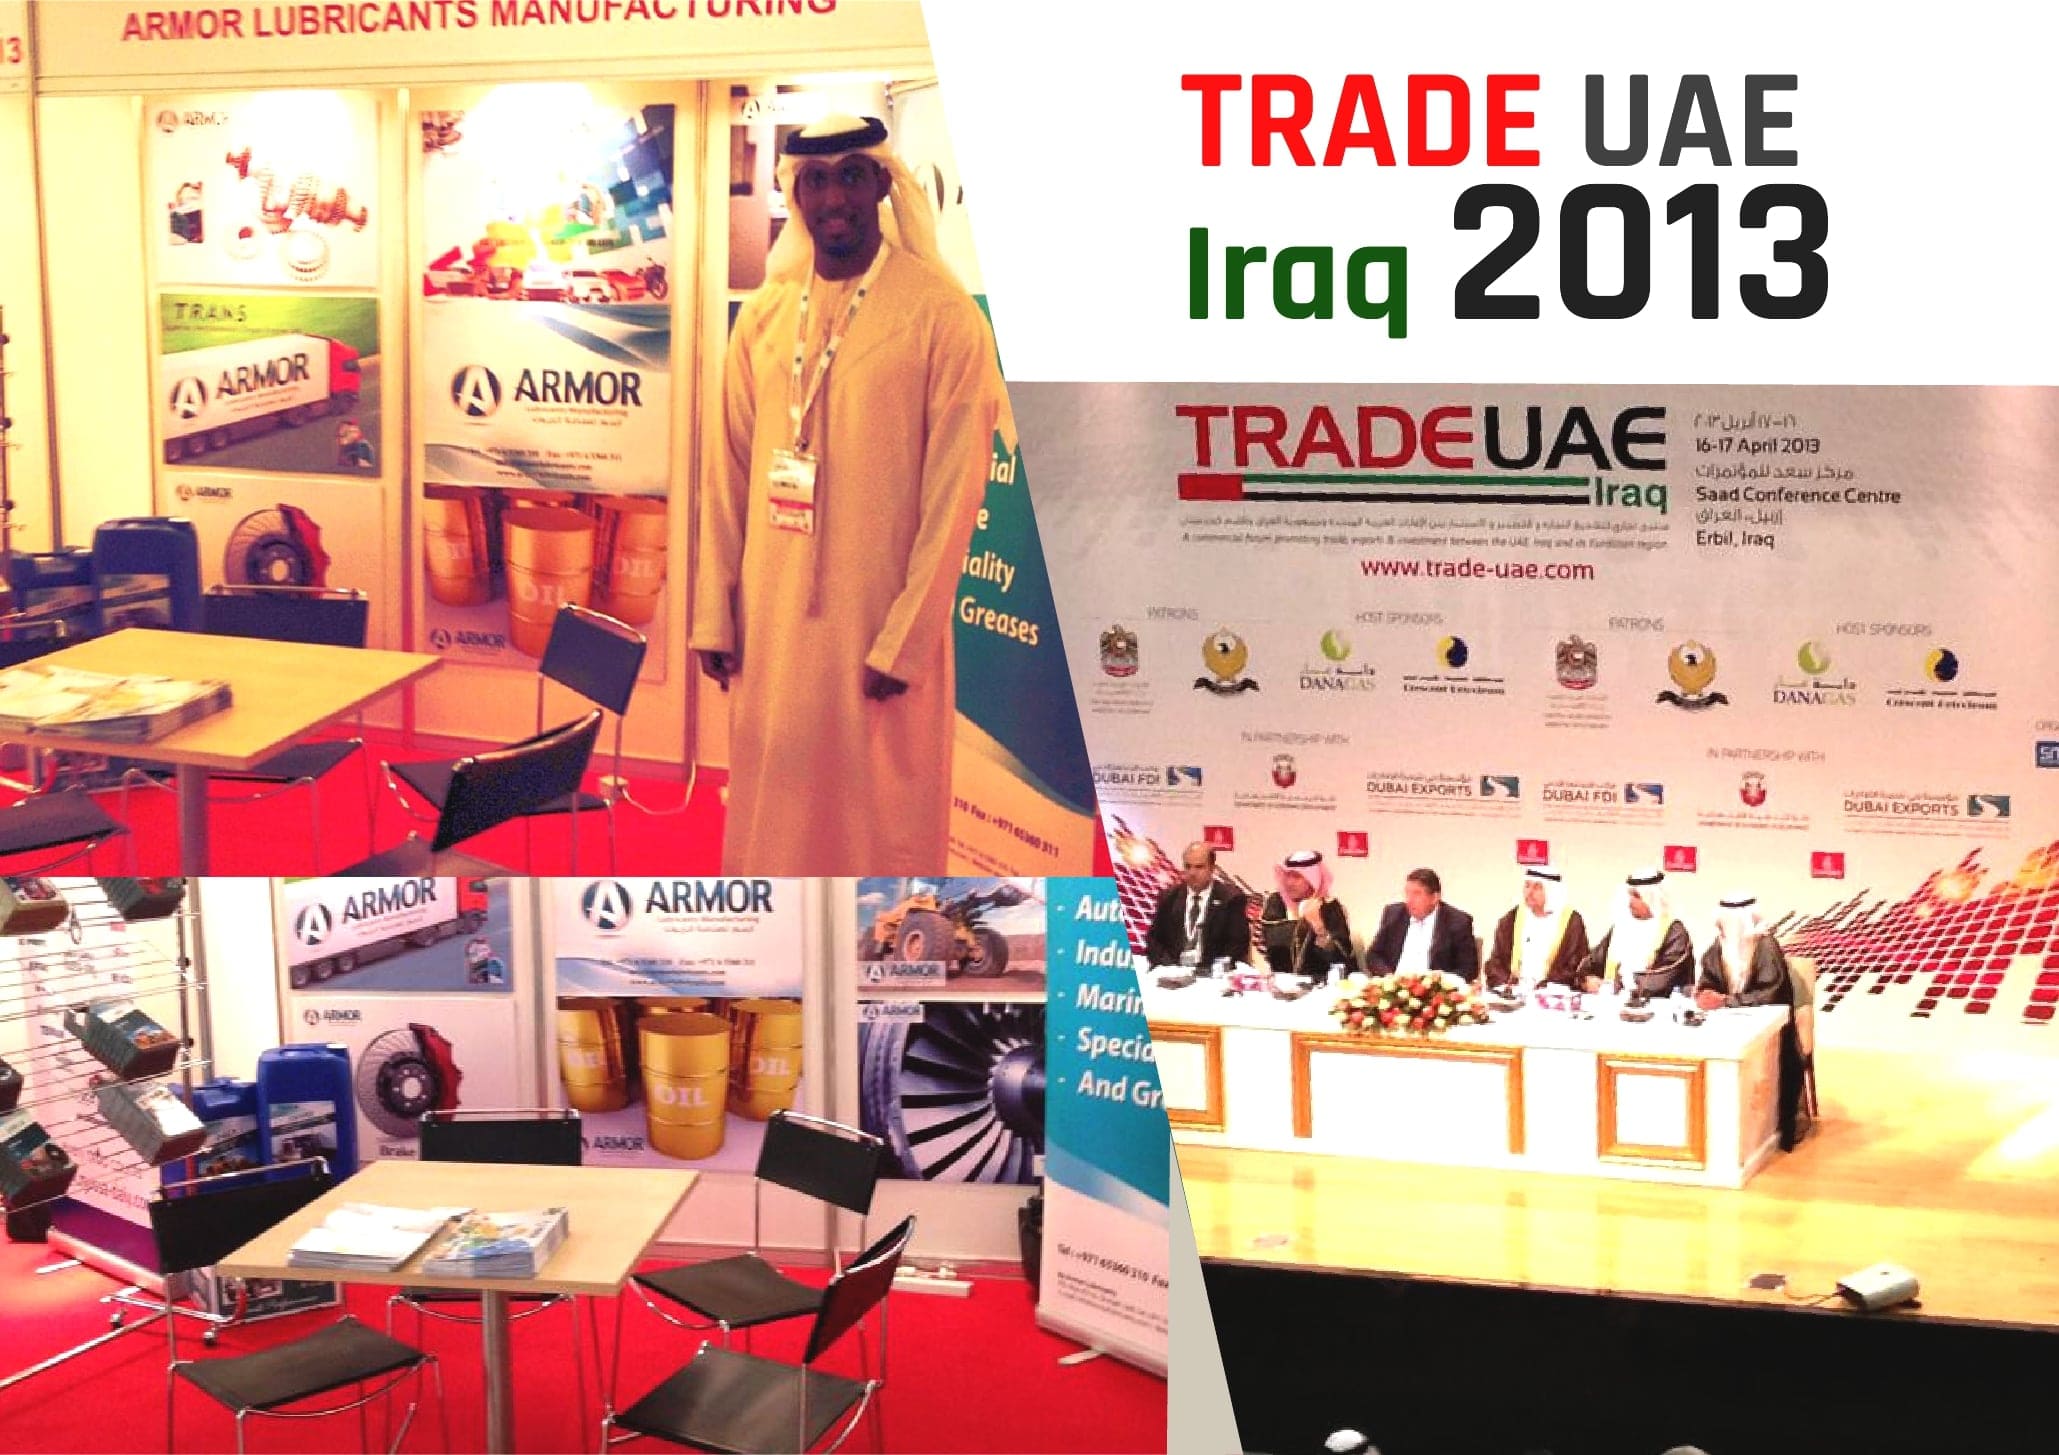 Armor Lubricants 2013 Trade UAE IRAQ Exhibition Participation Image